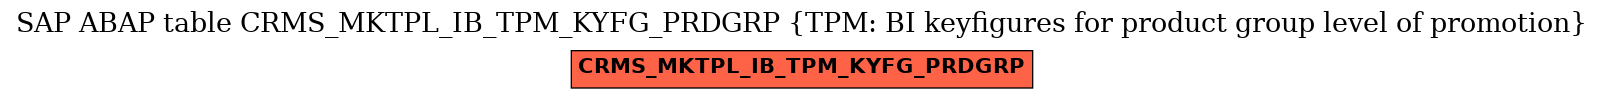 E-R Diagram for table CRMS_MKTPL_IB_TPM_KYFG_PRDGRP (TPM: BI keyfigures for product group level of promotion)